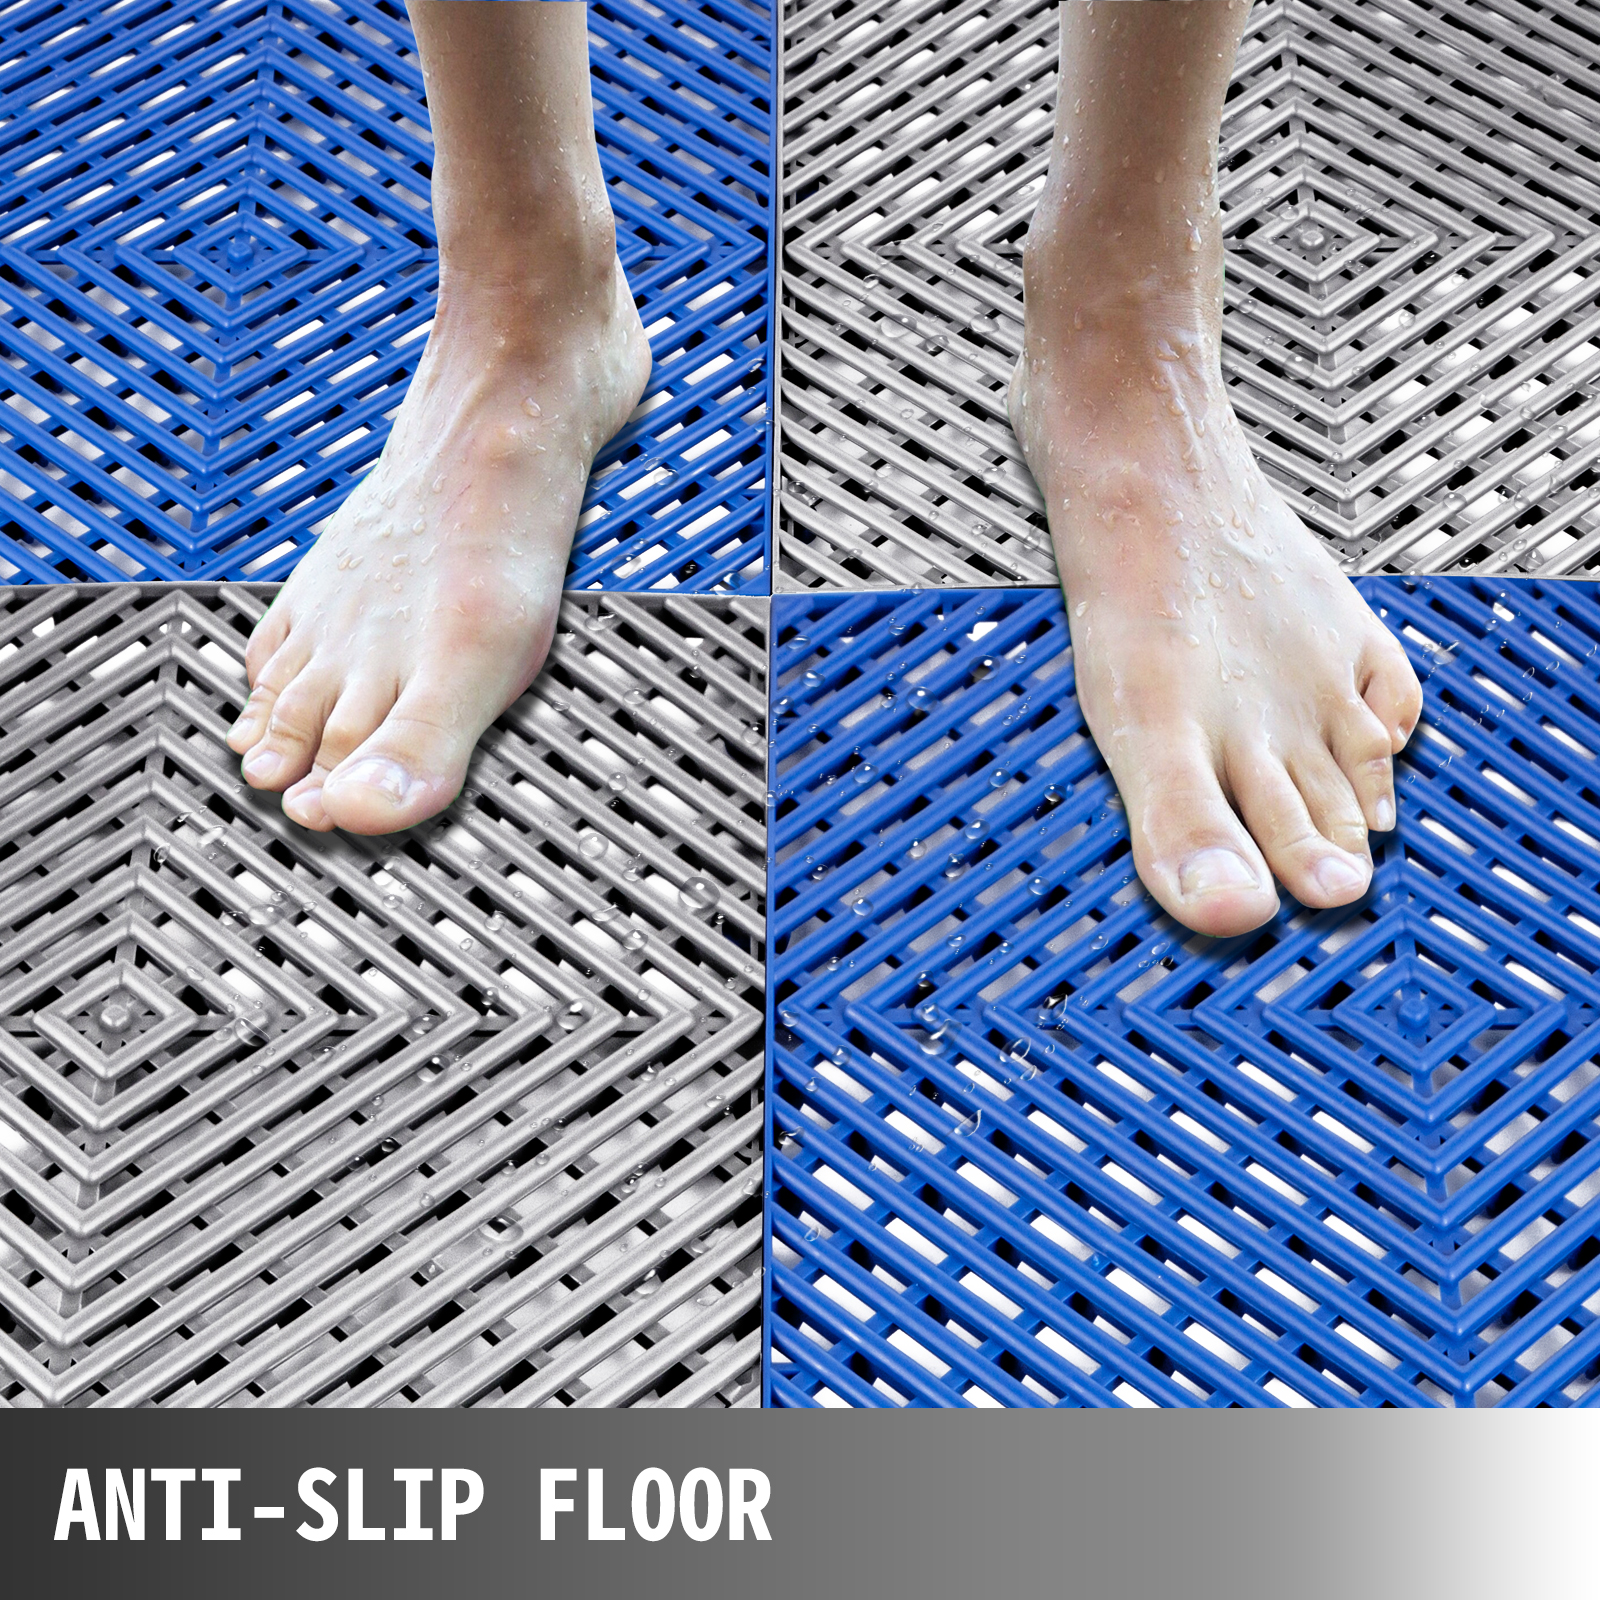 VEVOR Interlocking Garage Floor Tiles 12x12x0.5 55 Pieces Deck Tile Blue DJHZX55PBU0000001V0